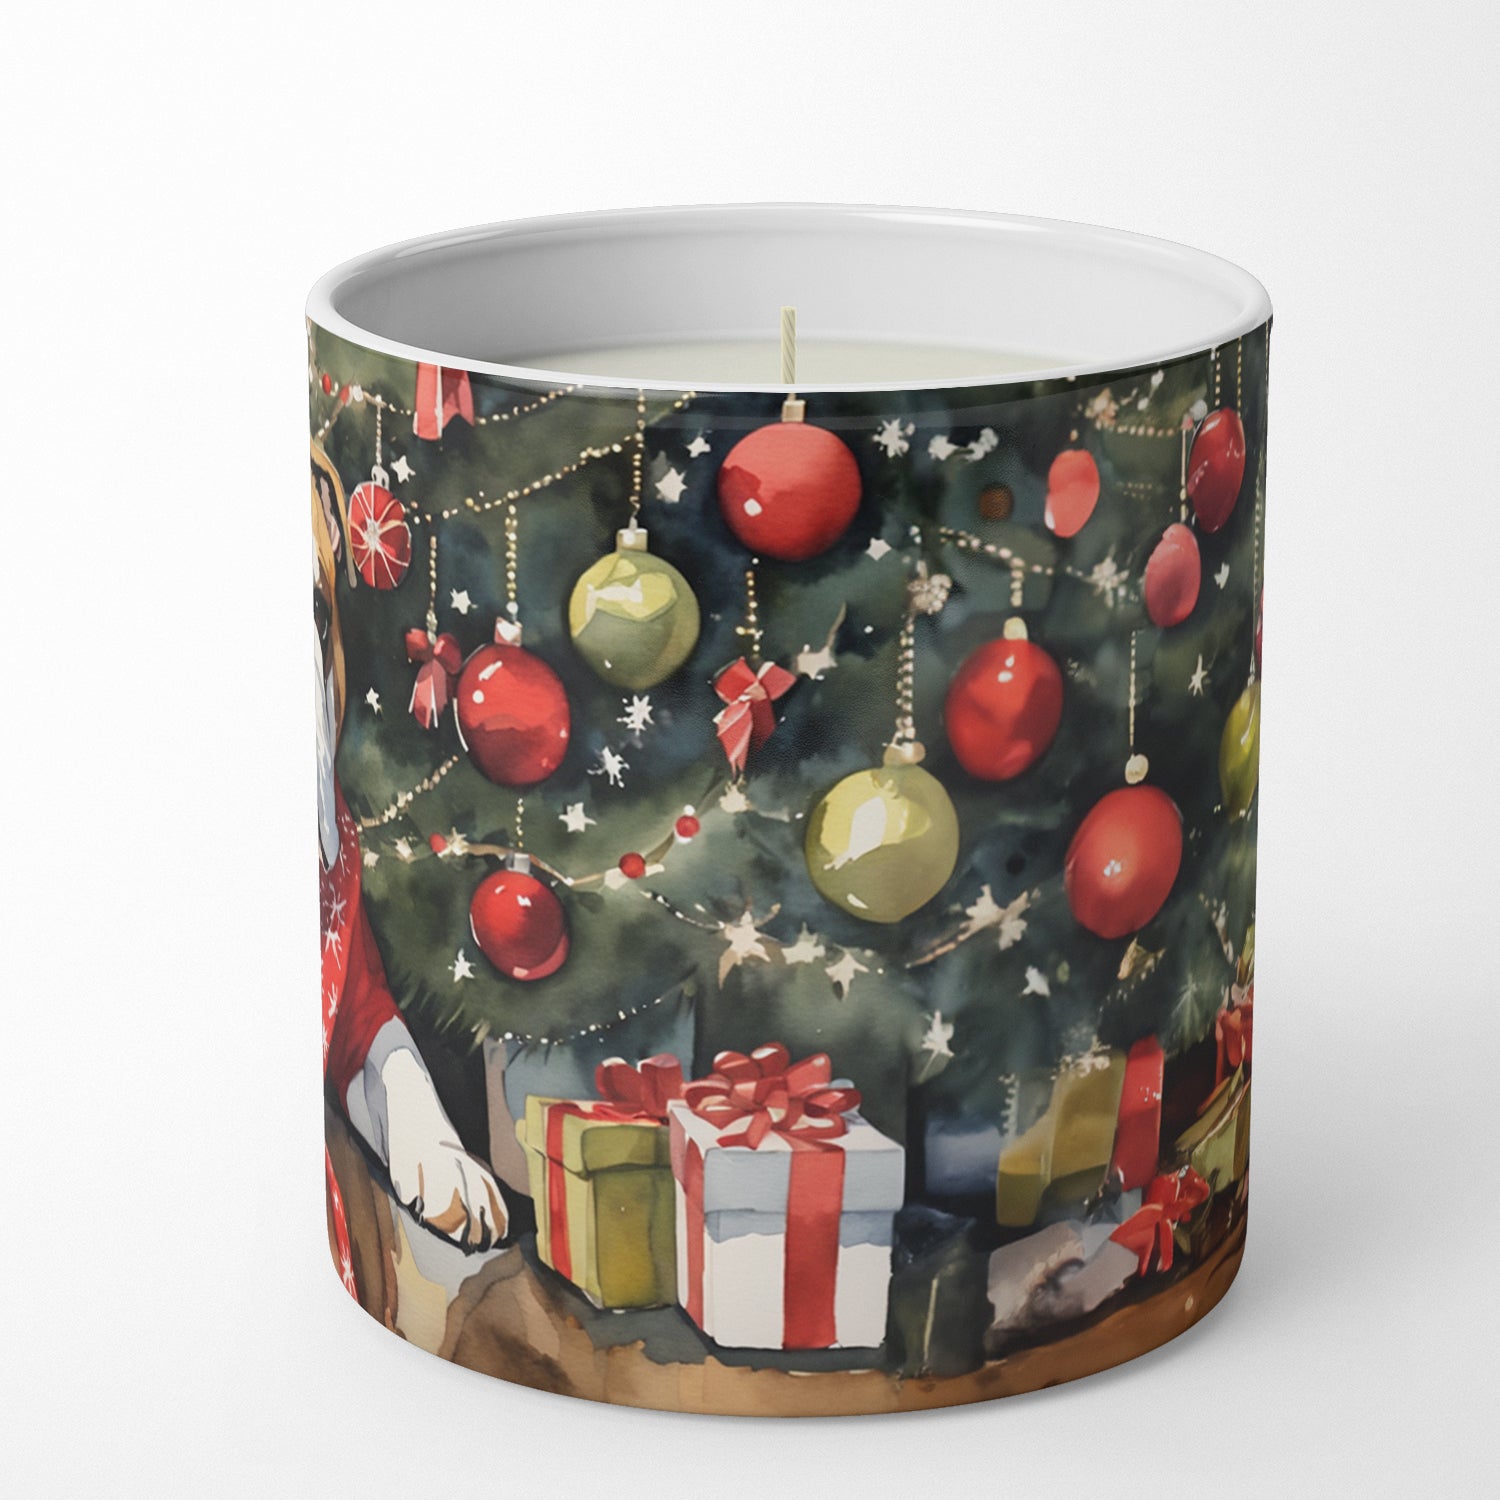 English Bulldog Cozy Christmas Decorative Soy Candle